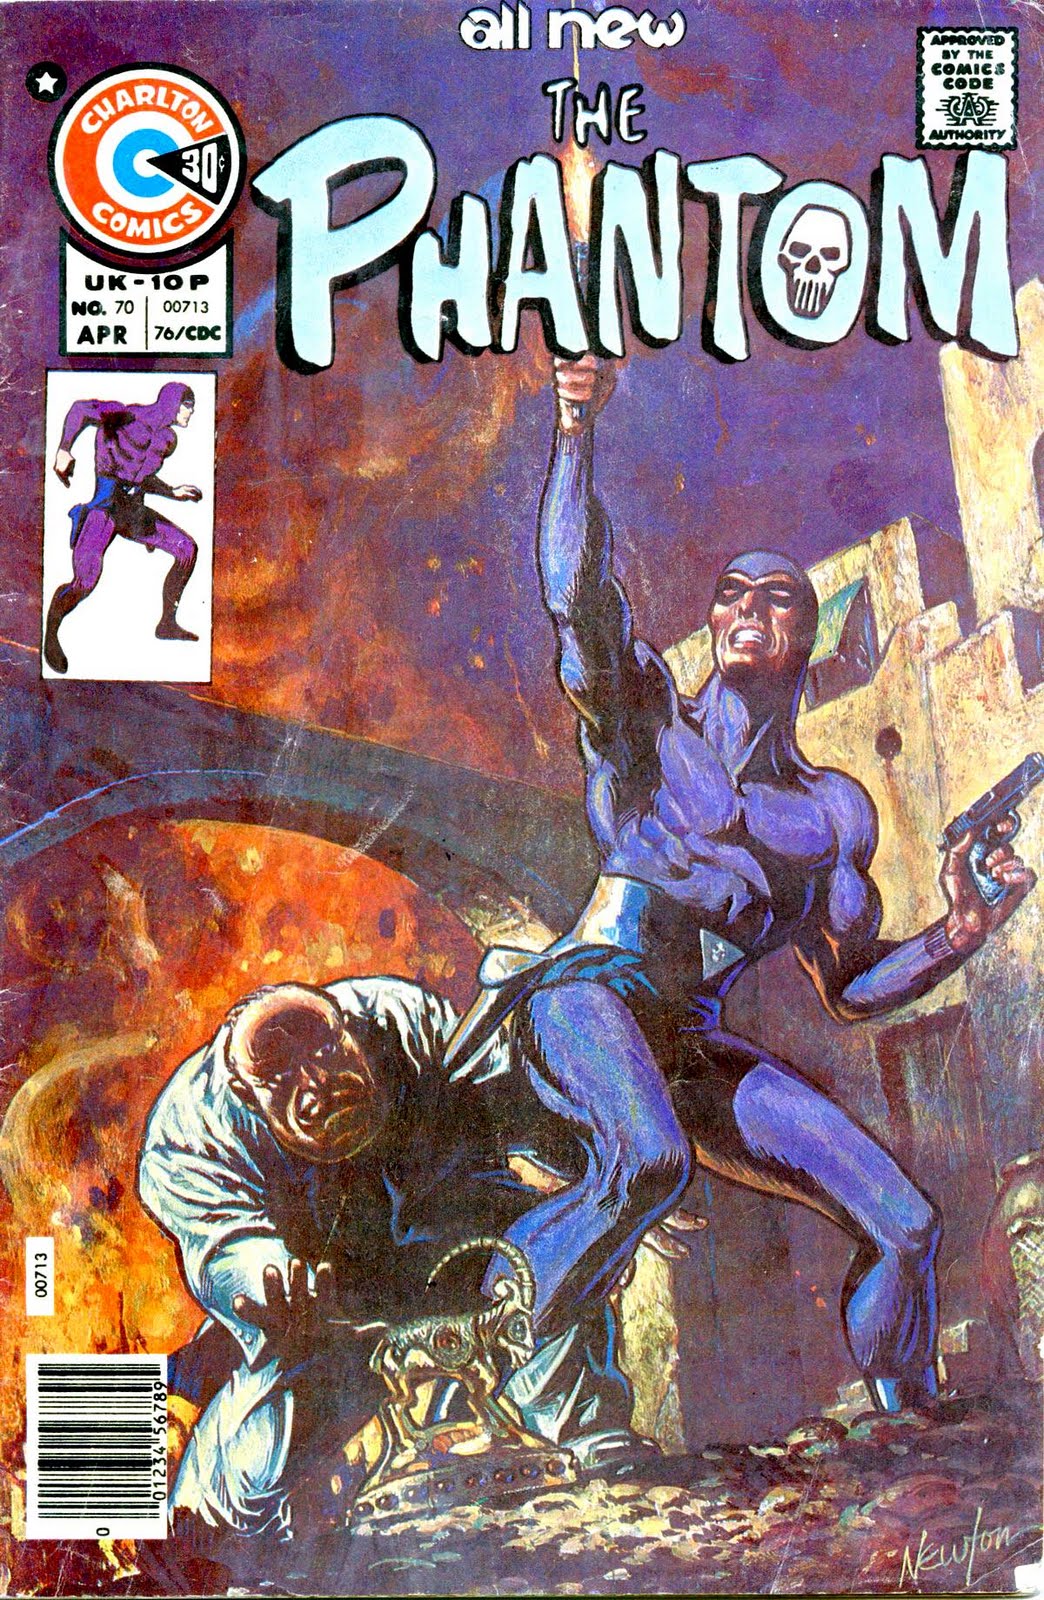 The Phantom v2 #70 charlton comic book cover art by Don Newton